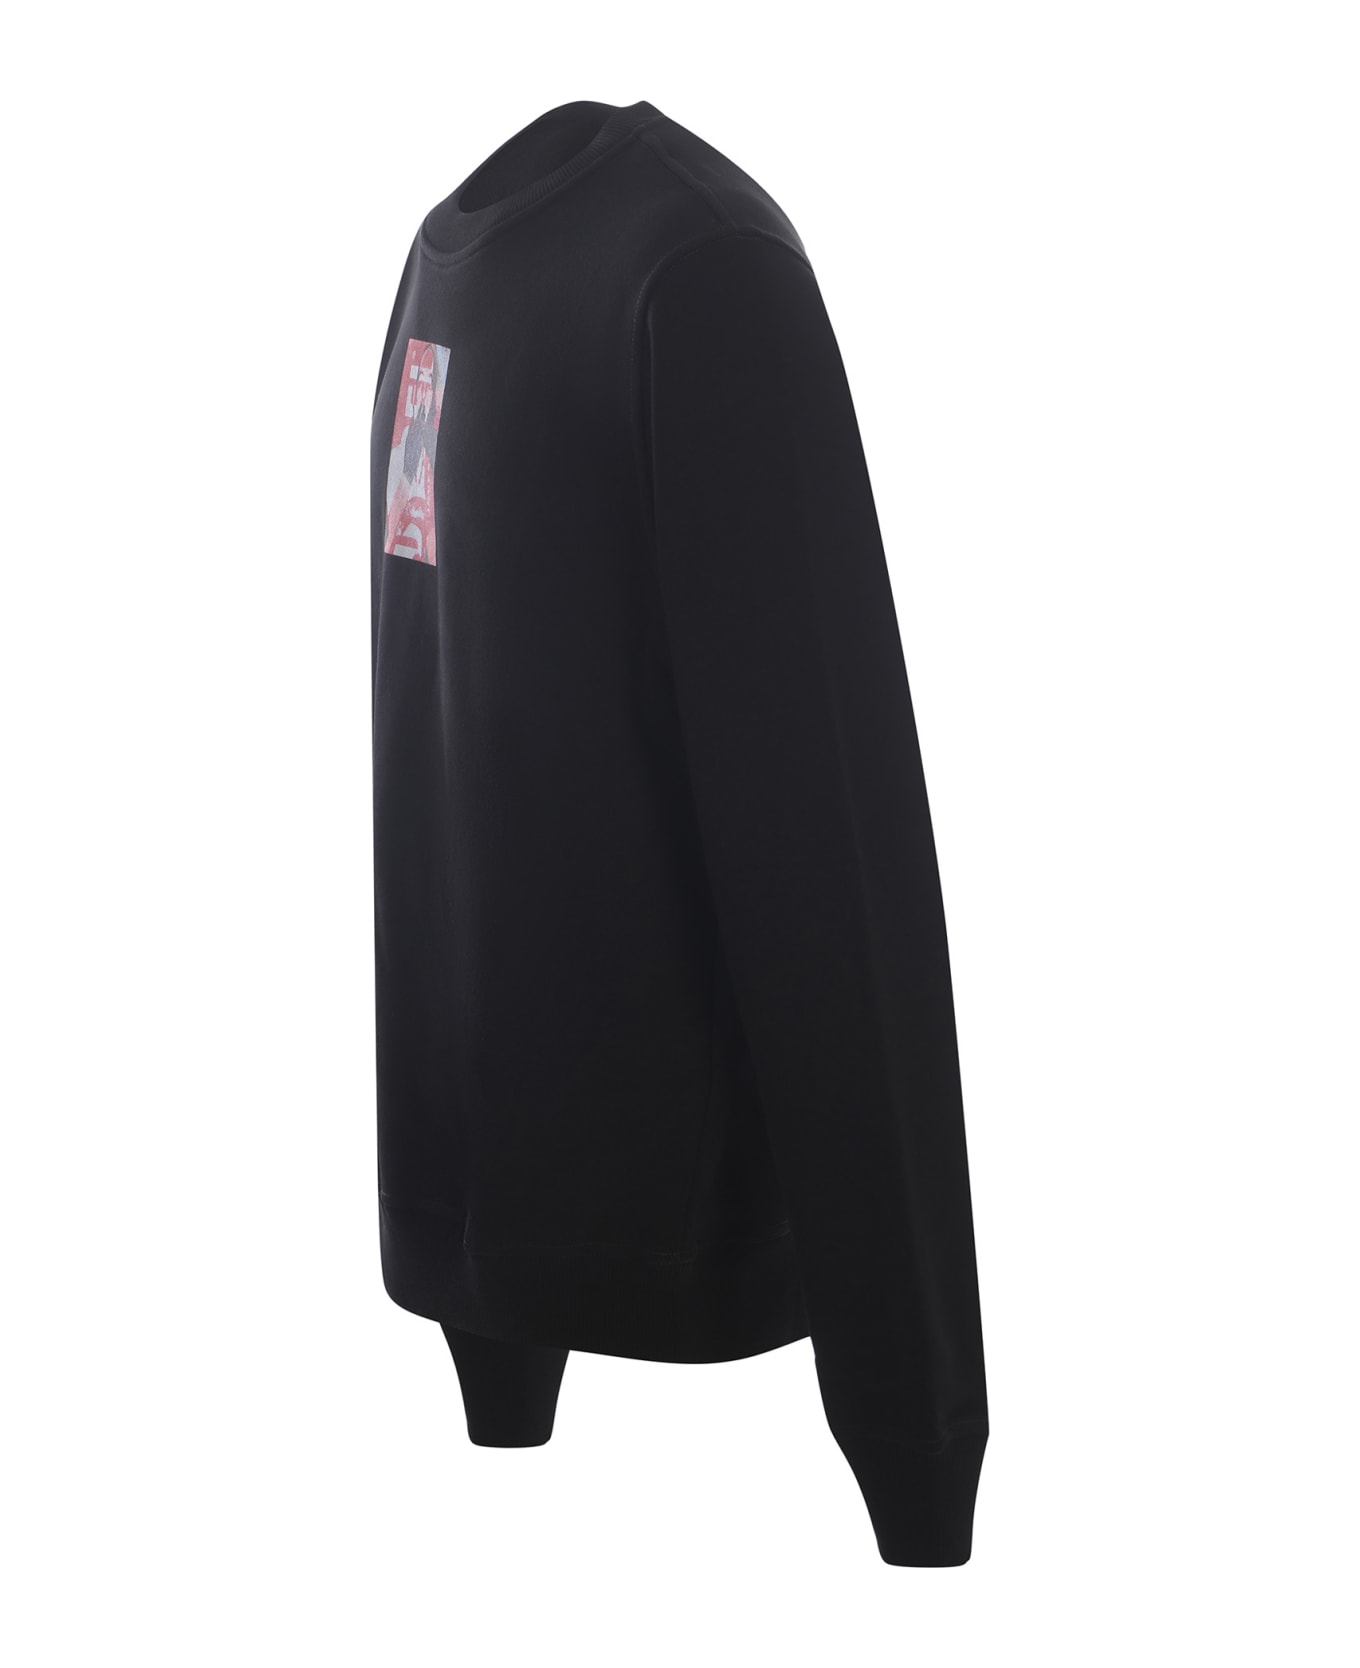 Diesel S-ginn N1 Sweatshirt - Xx Black フリース